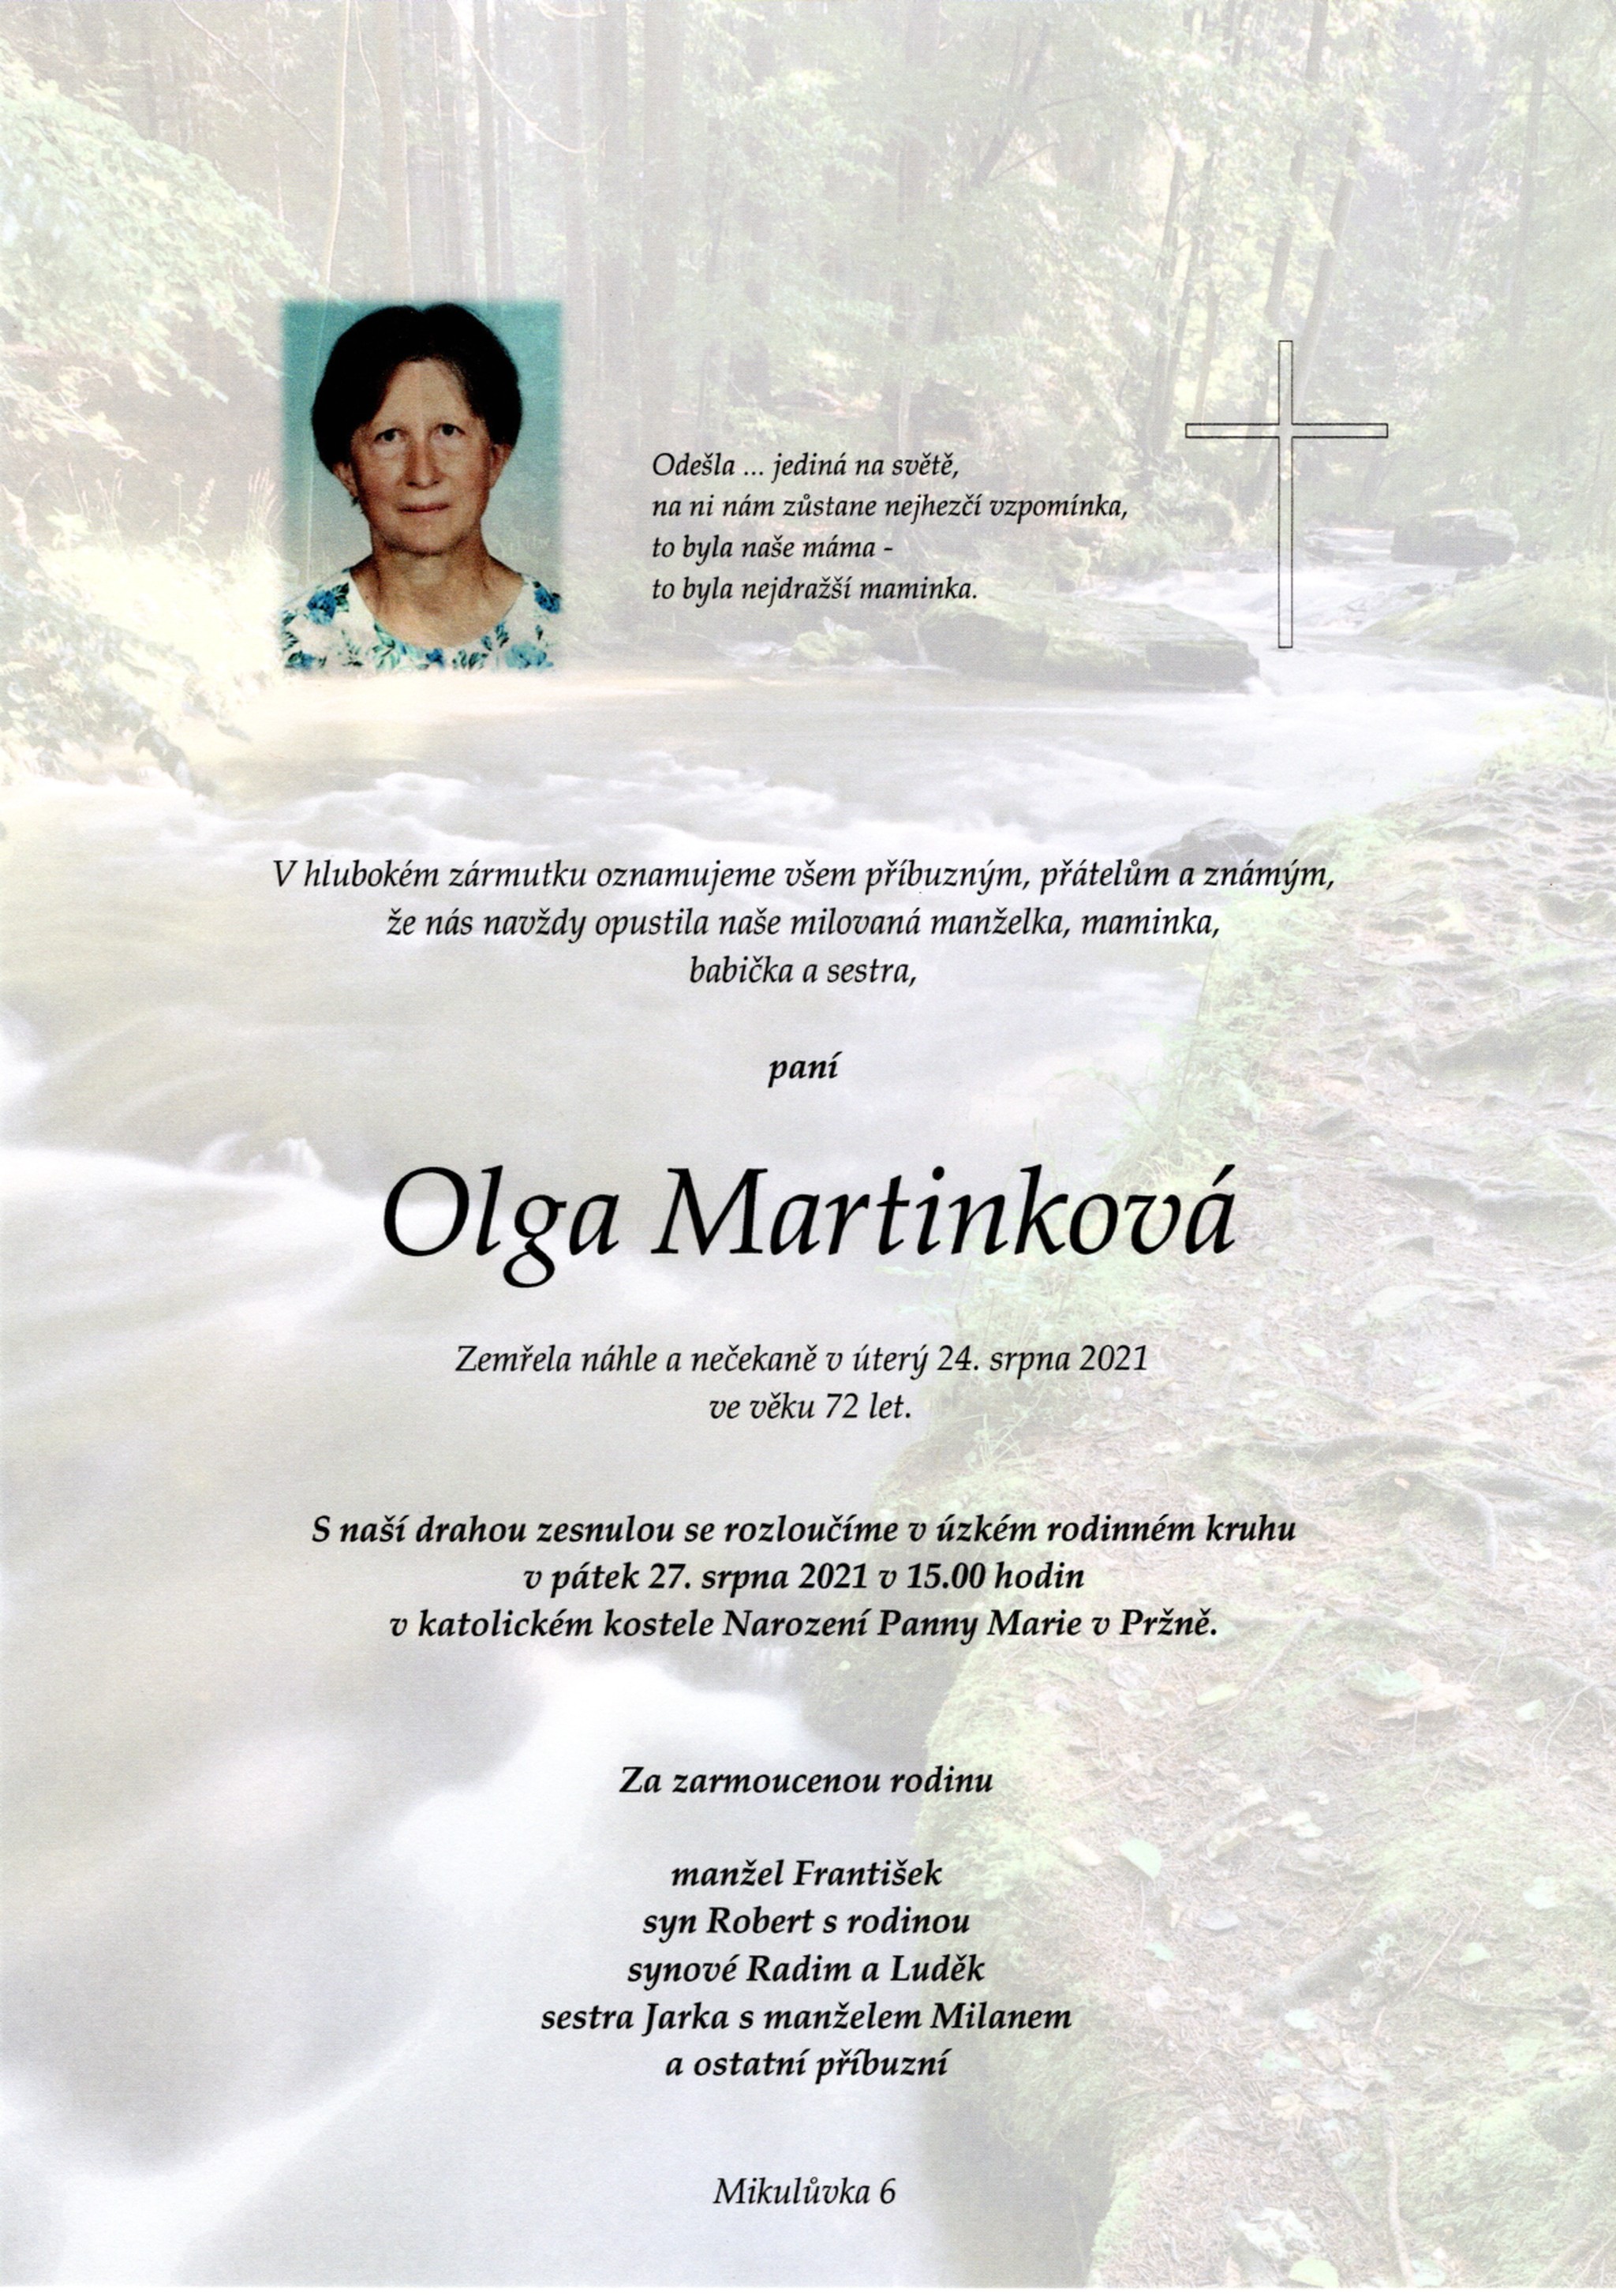 Olga Martinková